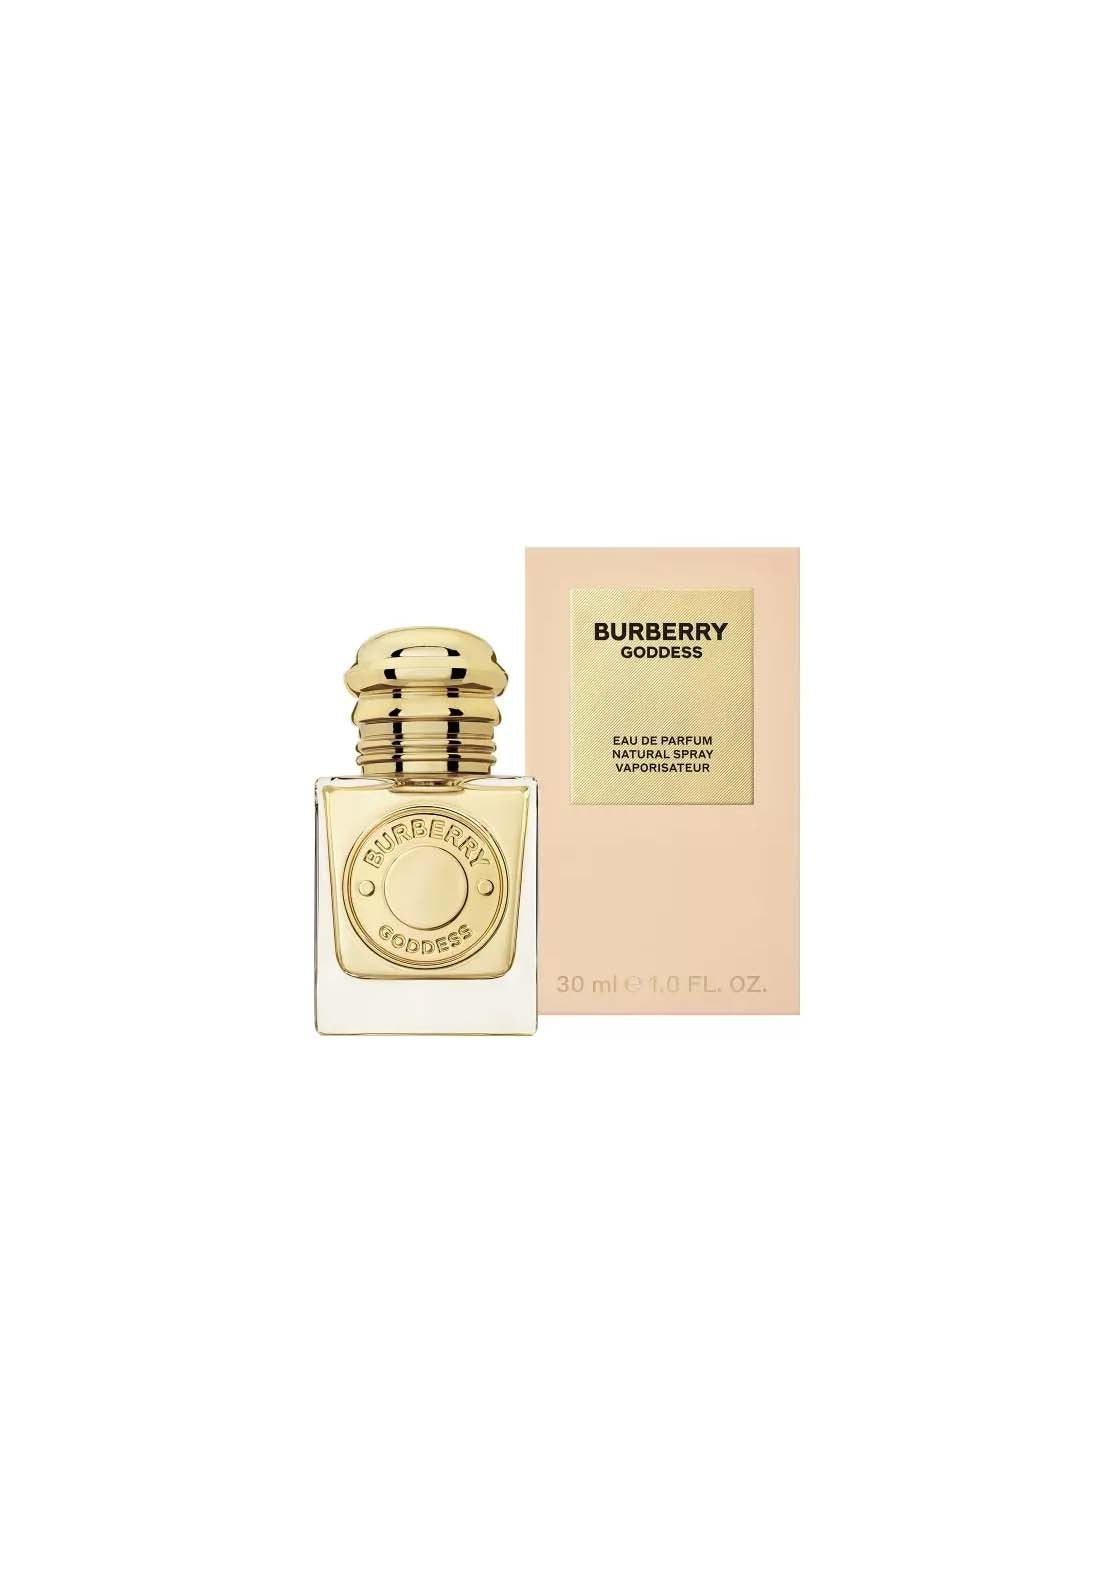 Burberry Burberry Goddess Eau de Parfum 4 Shaws Department Stores